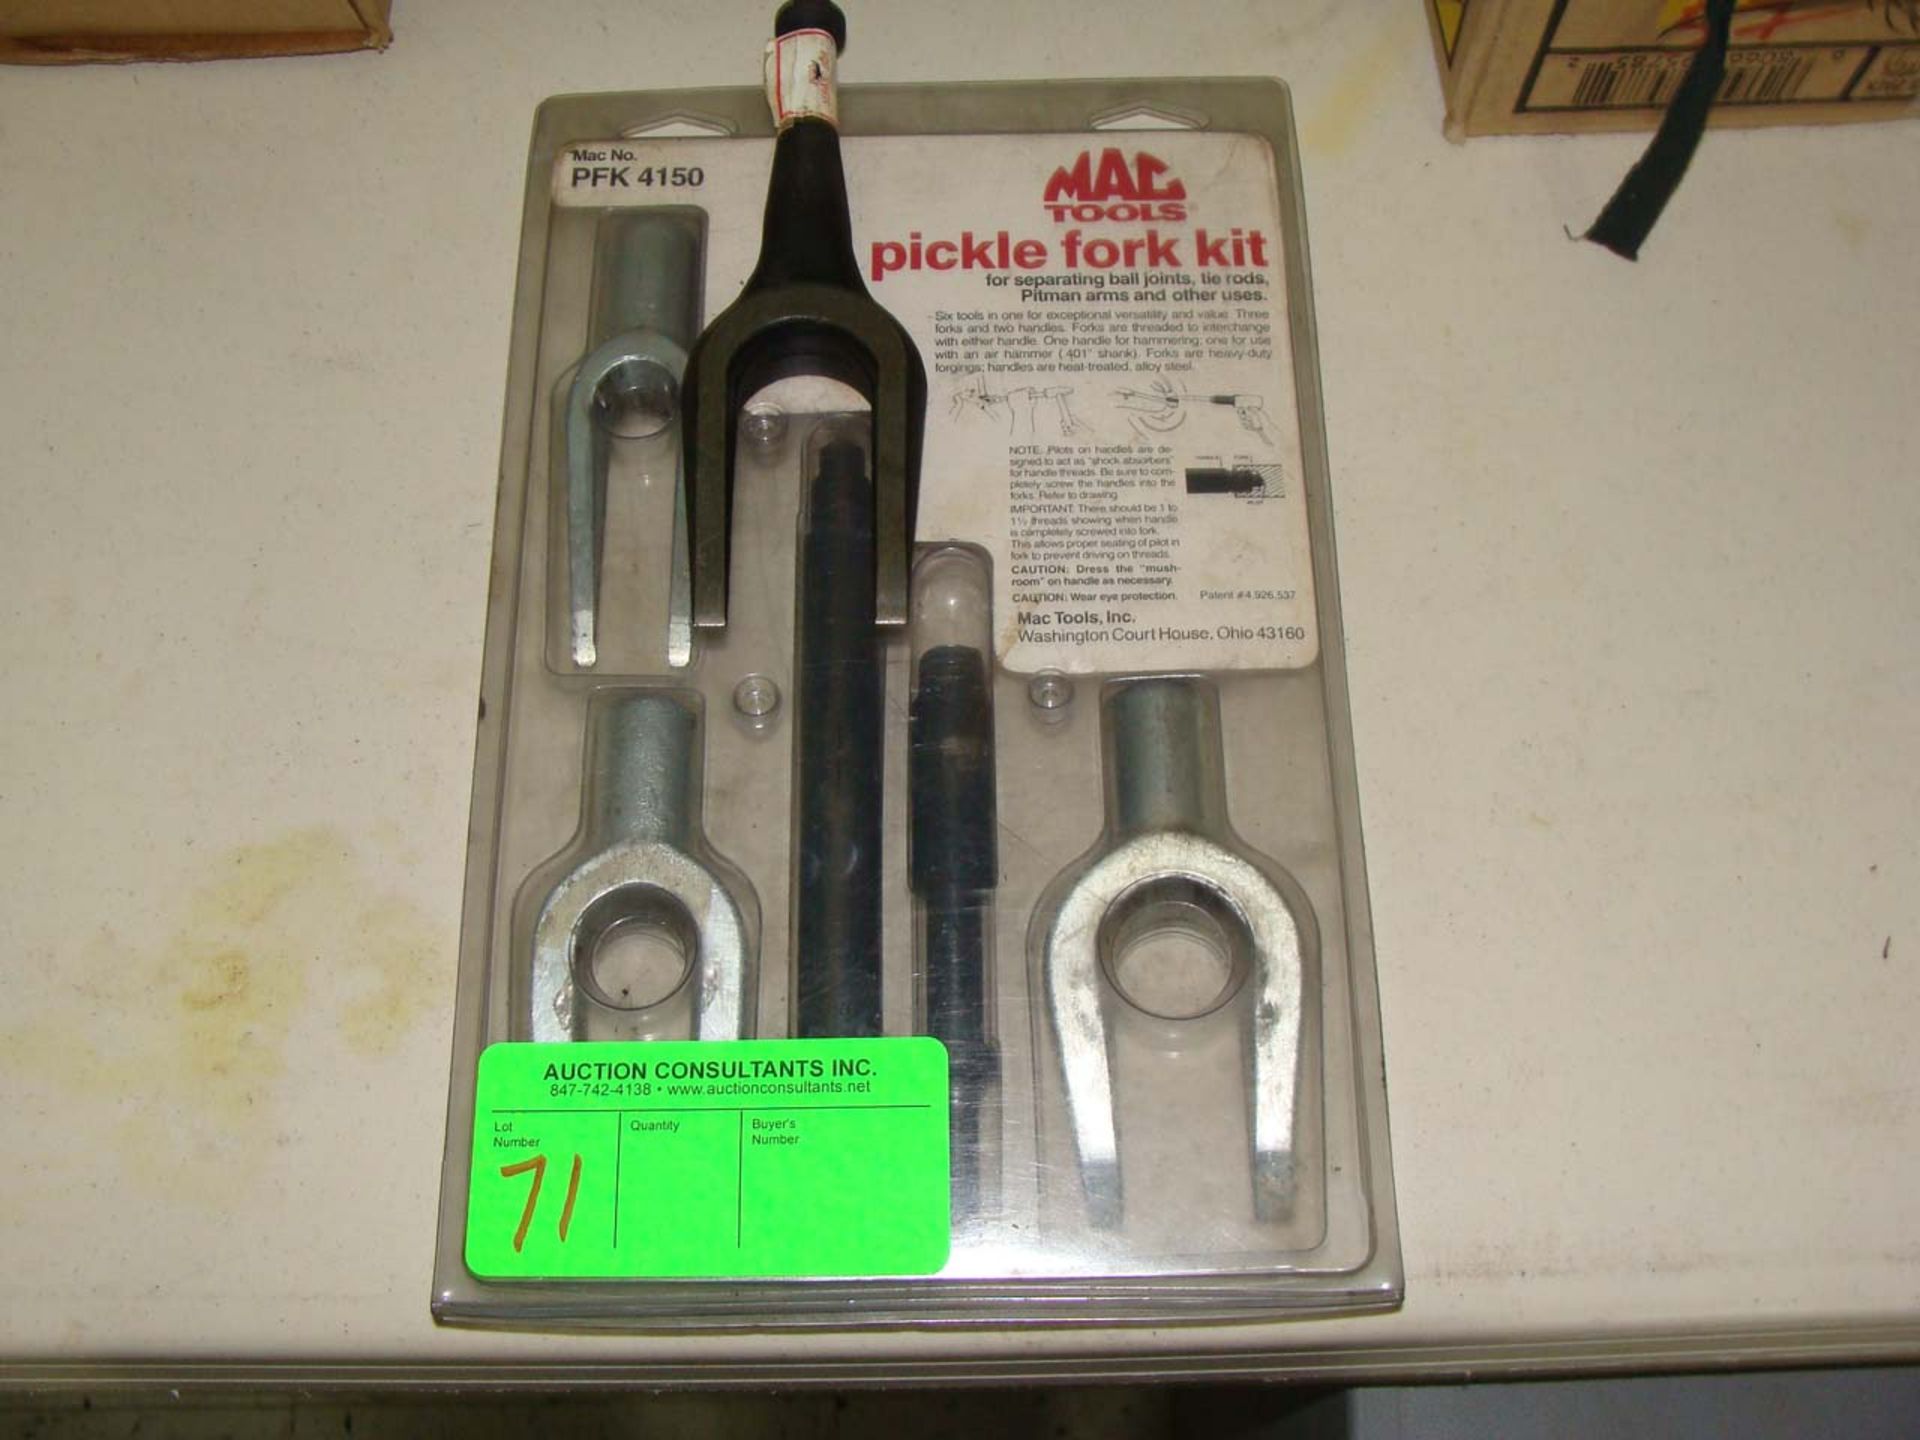 Mac PFK4150 Pickle Fork Kit